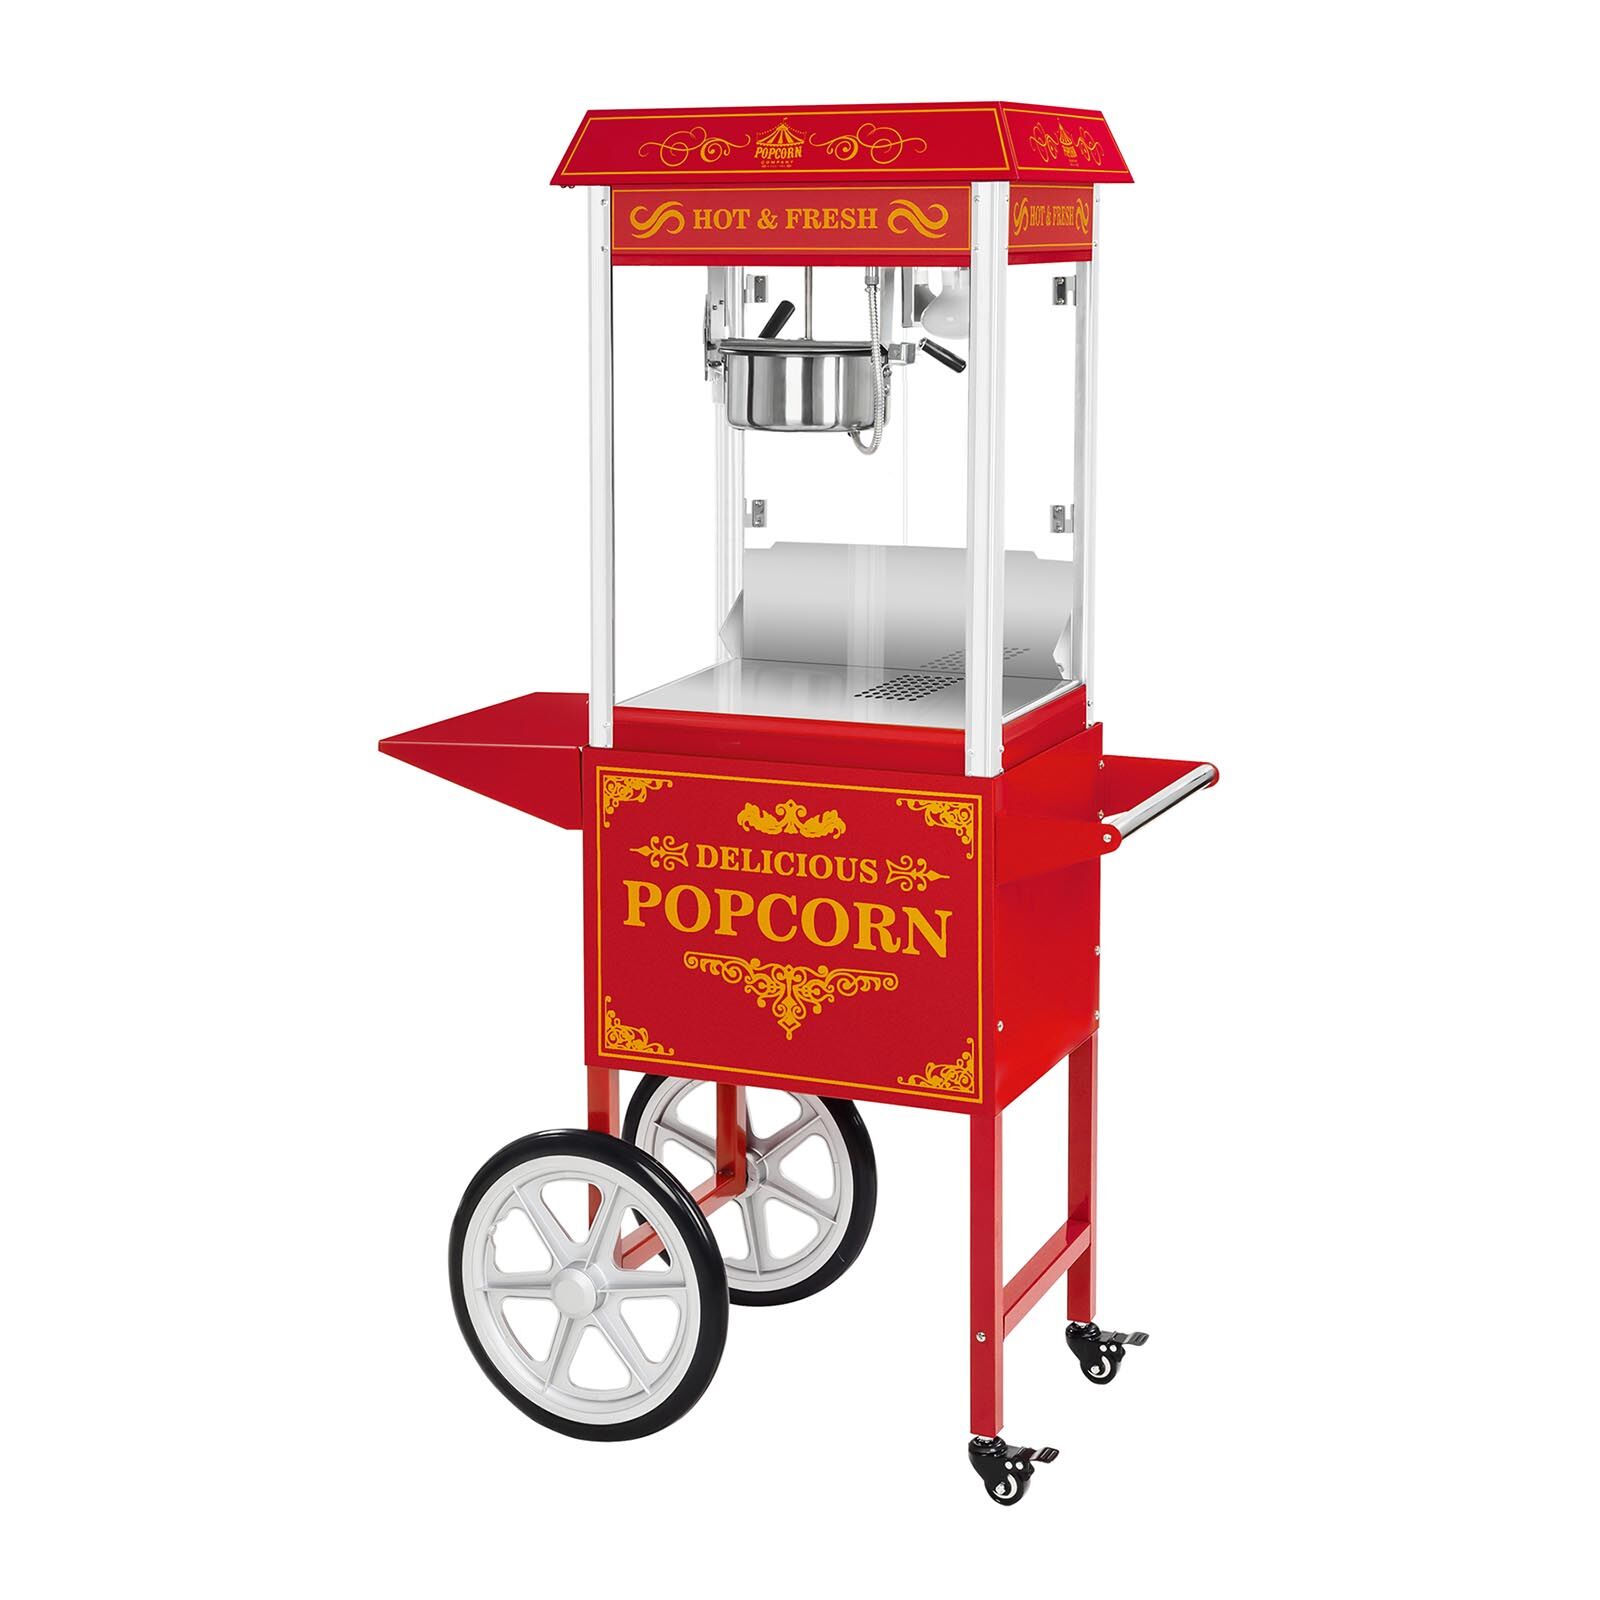 Royal Catering Popcornmaskin med vogn - Retro design - rød 10010537